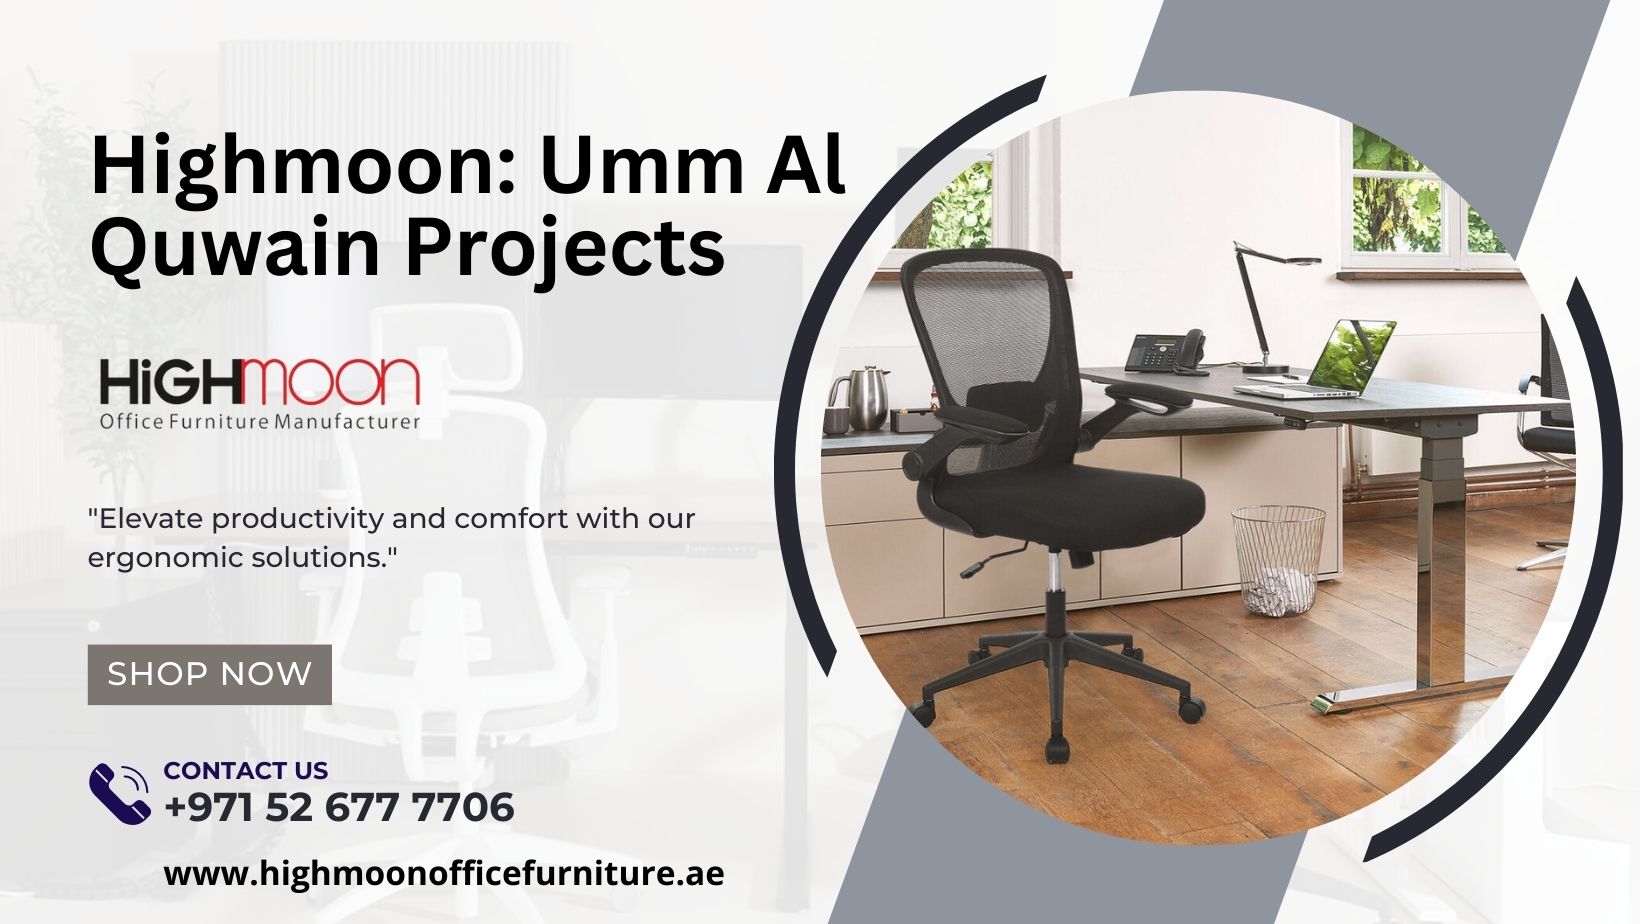 Office Furniture Projects in Umm Al Quwain